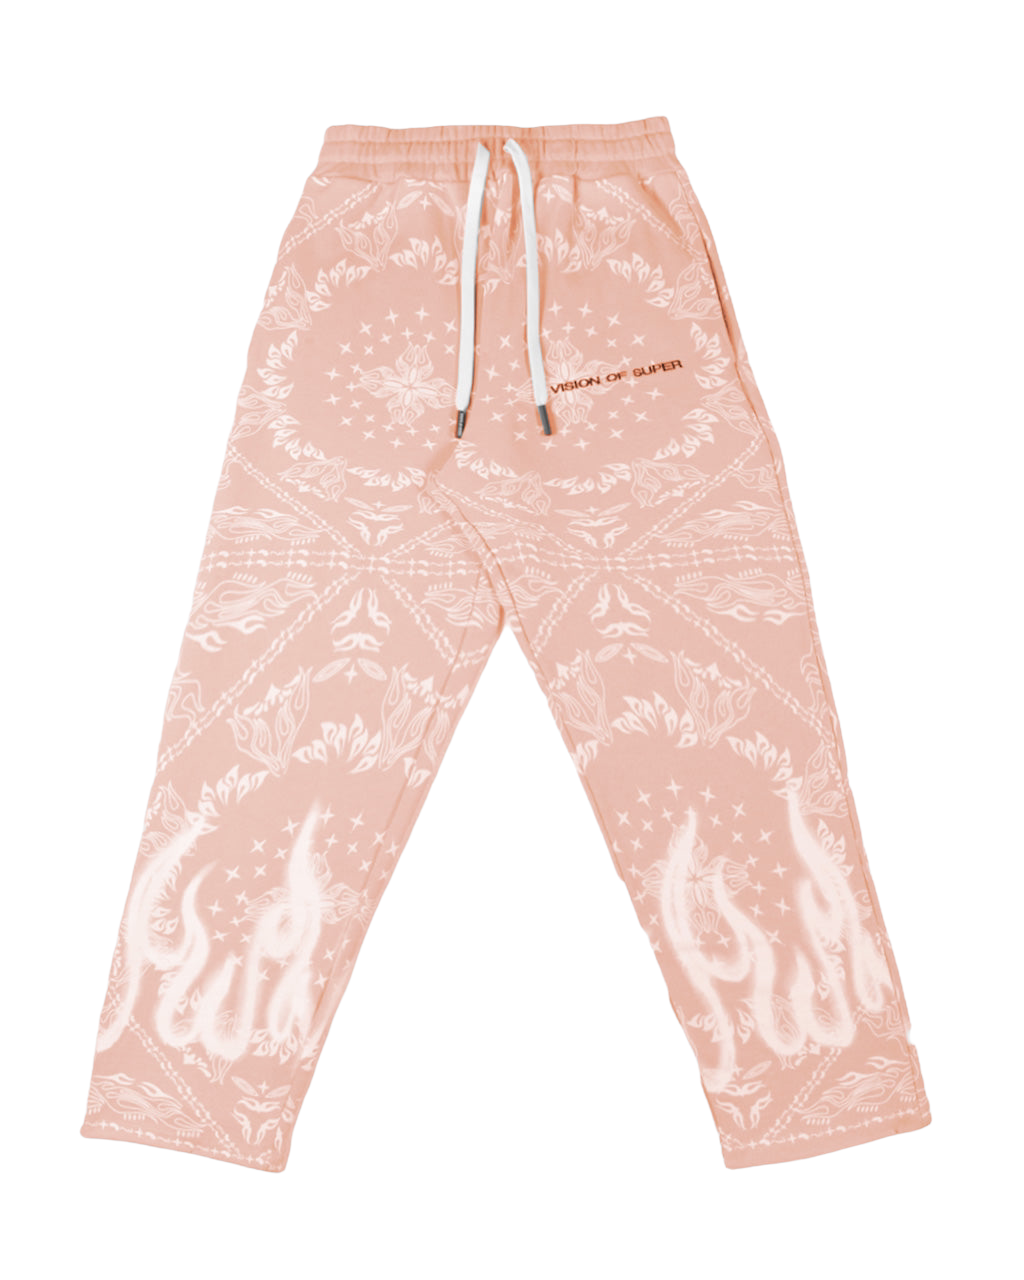 Pantalone rosa con stampa per bambina